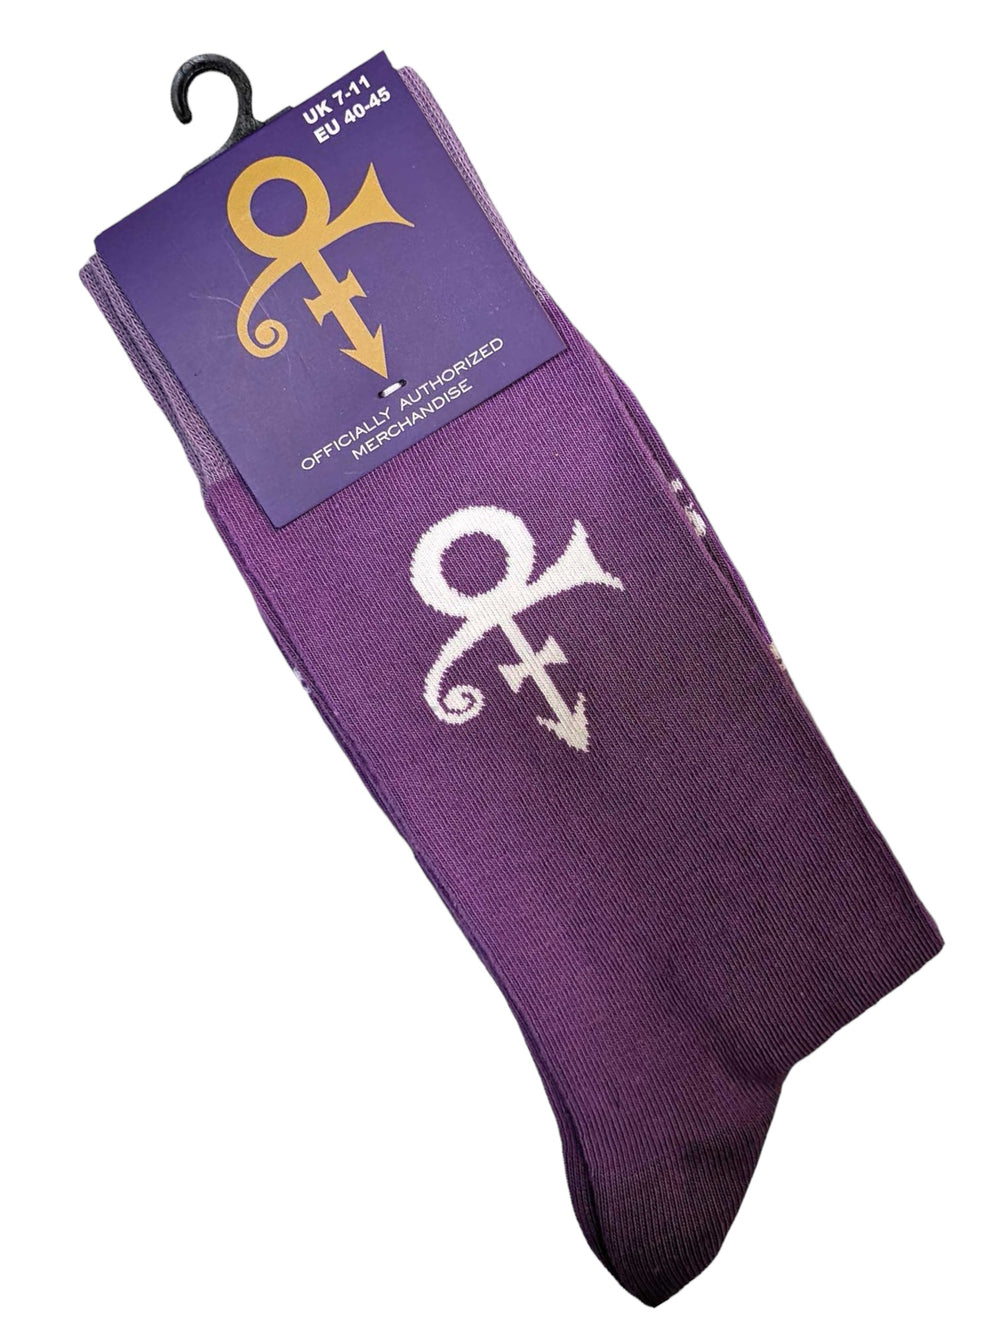 Prince – Purple Symbol Official Product 1 Pair Jacquard Socks Brand NEW